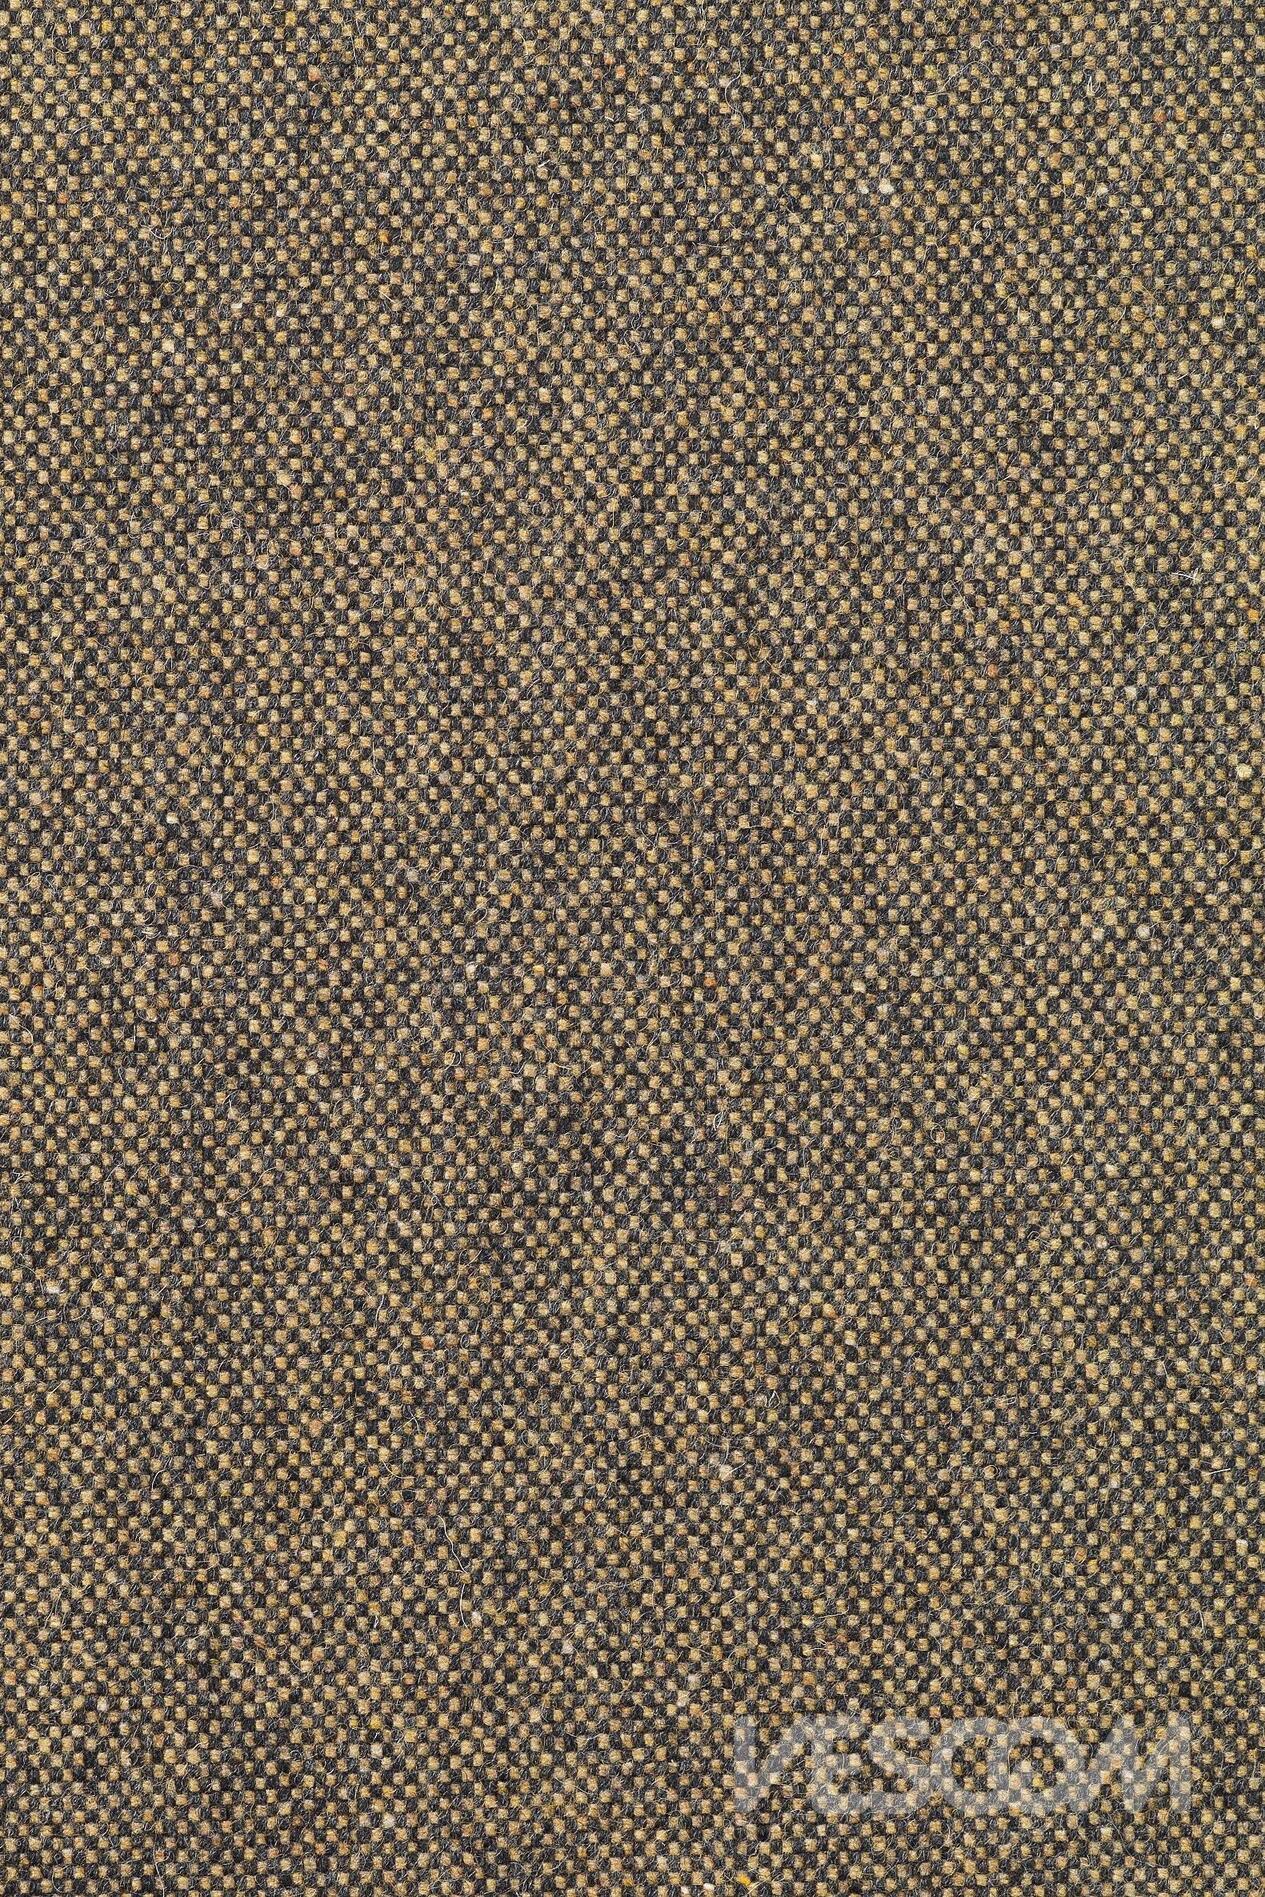 Vescom-Wolin-Upholstery-Fabric-7050.19.jpg